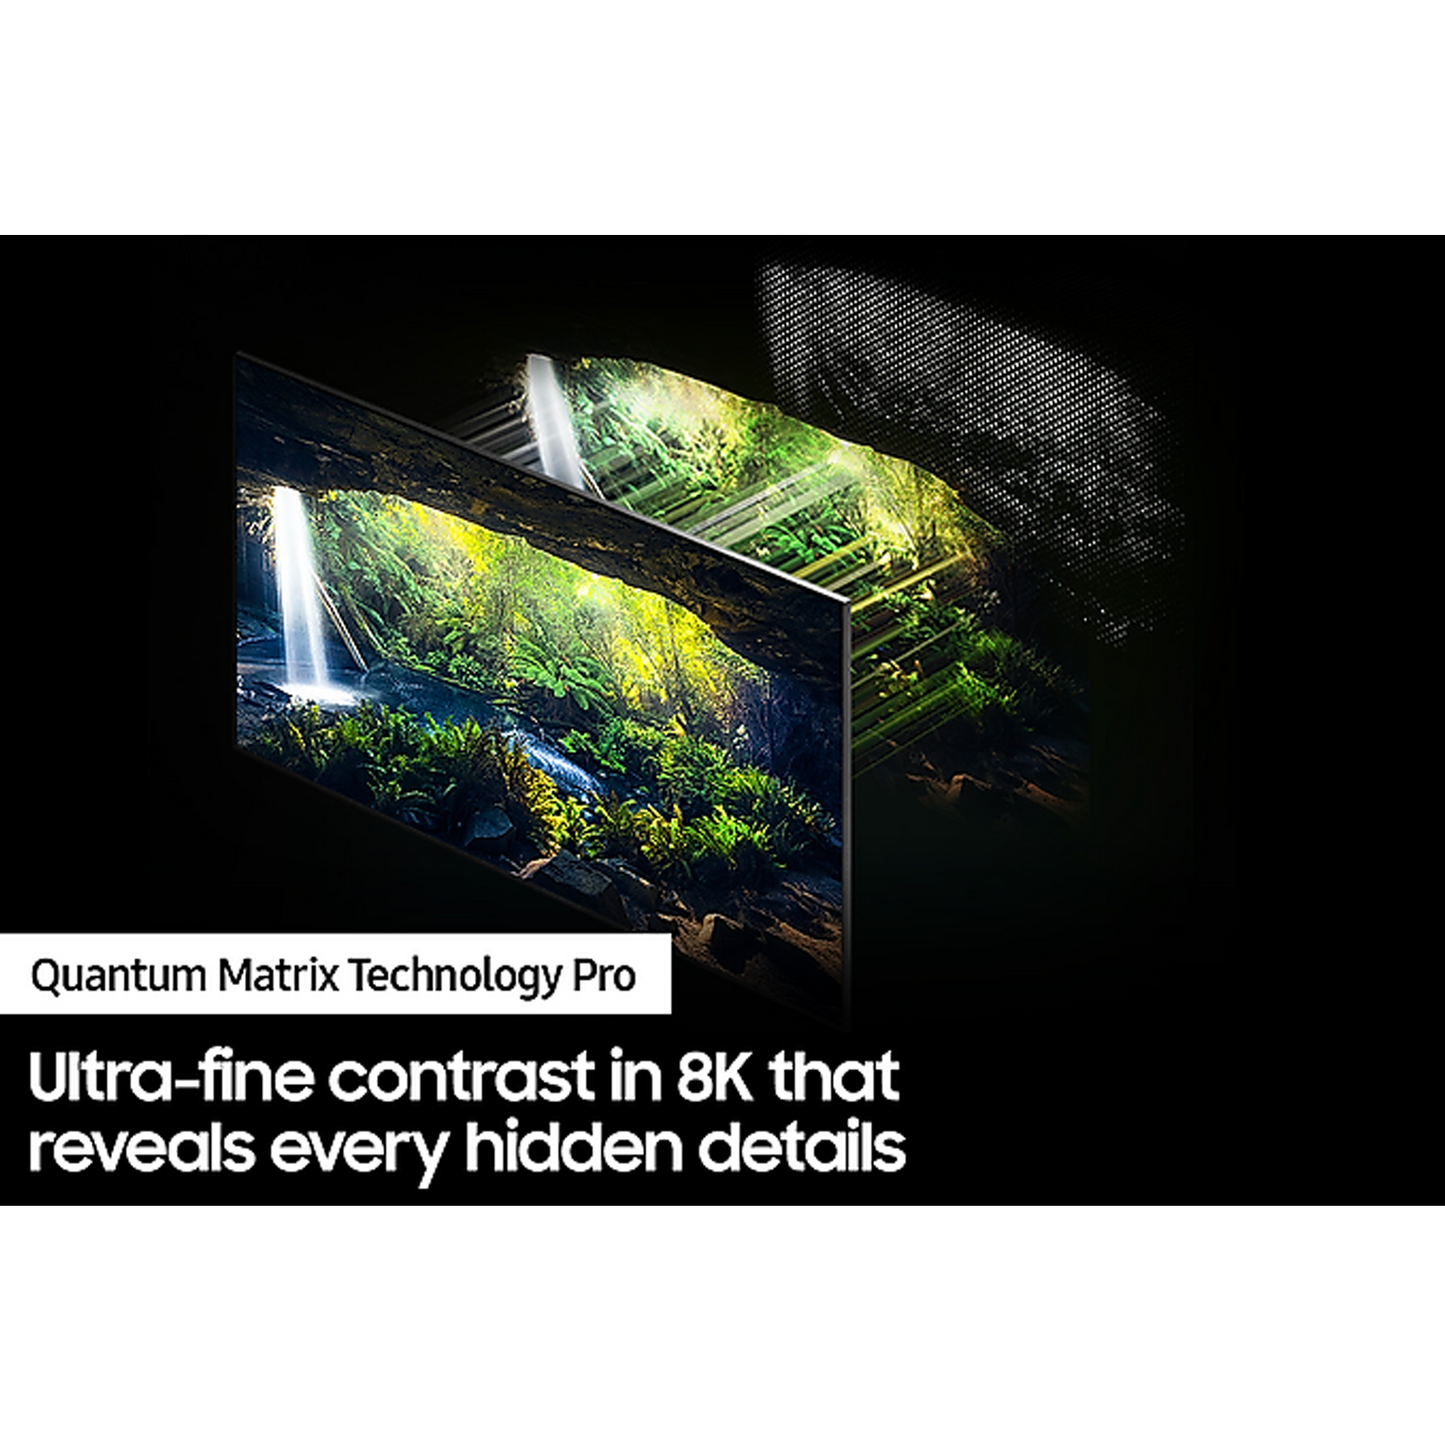 Samsung 75 inch Smart Neo QLED TV - 8K, 75QN800B